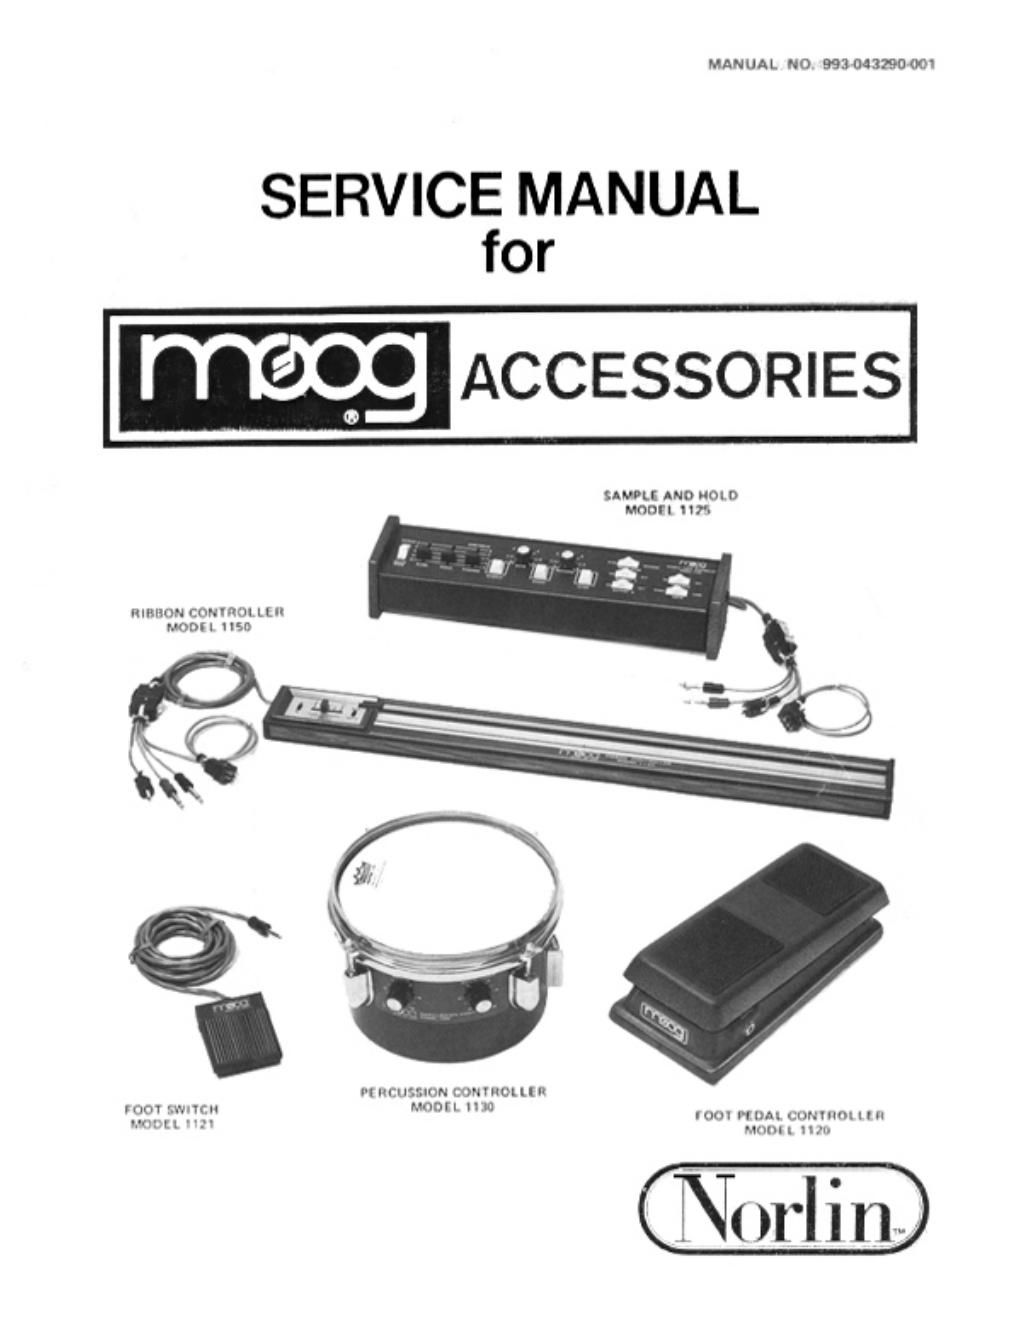 moog accessories service manual